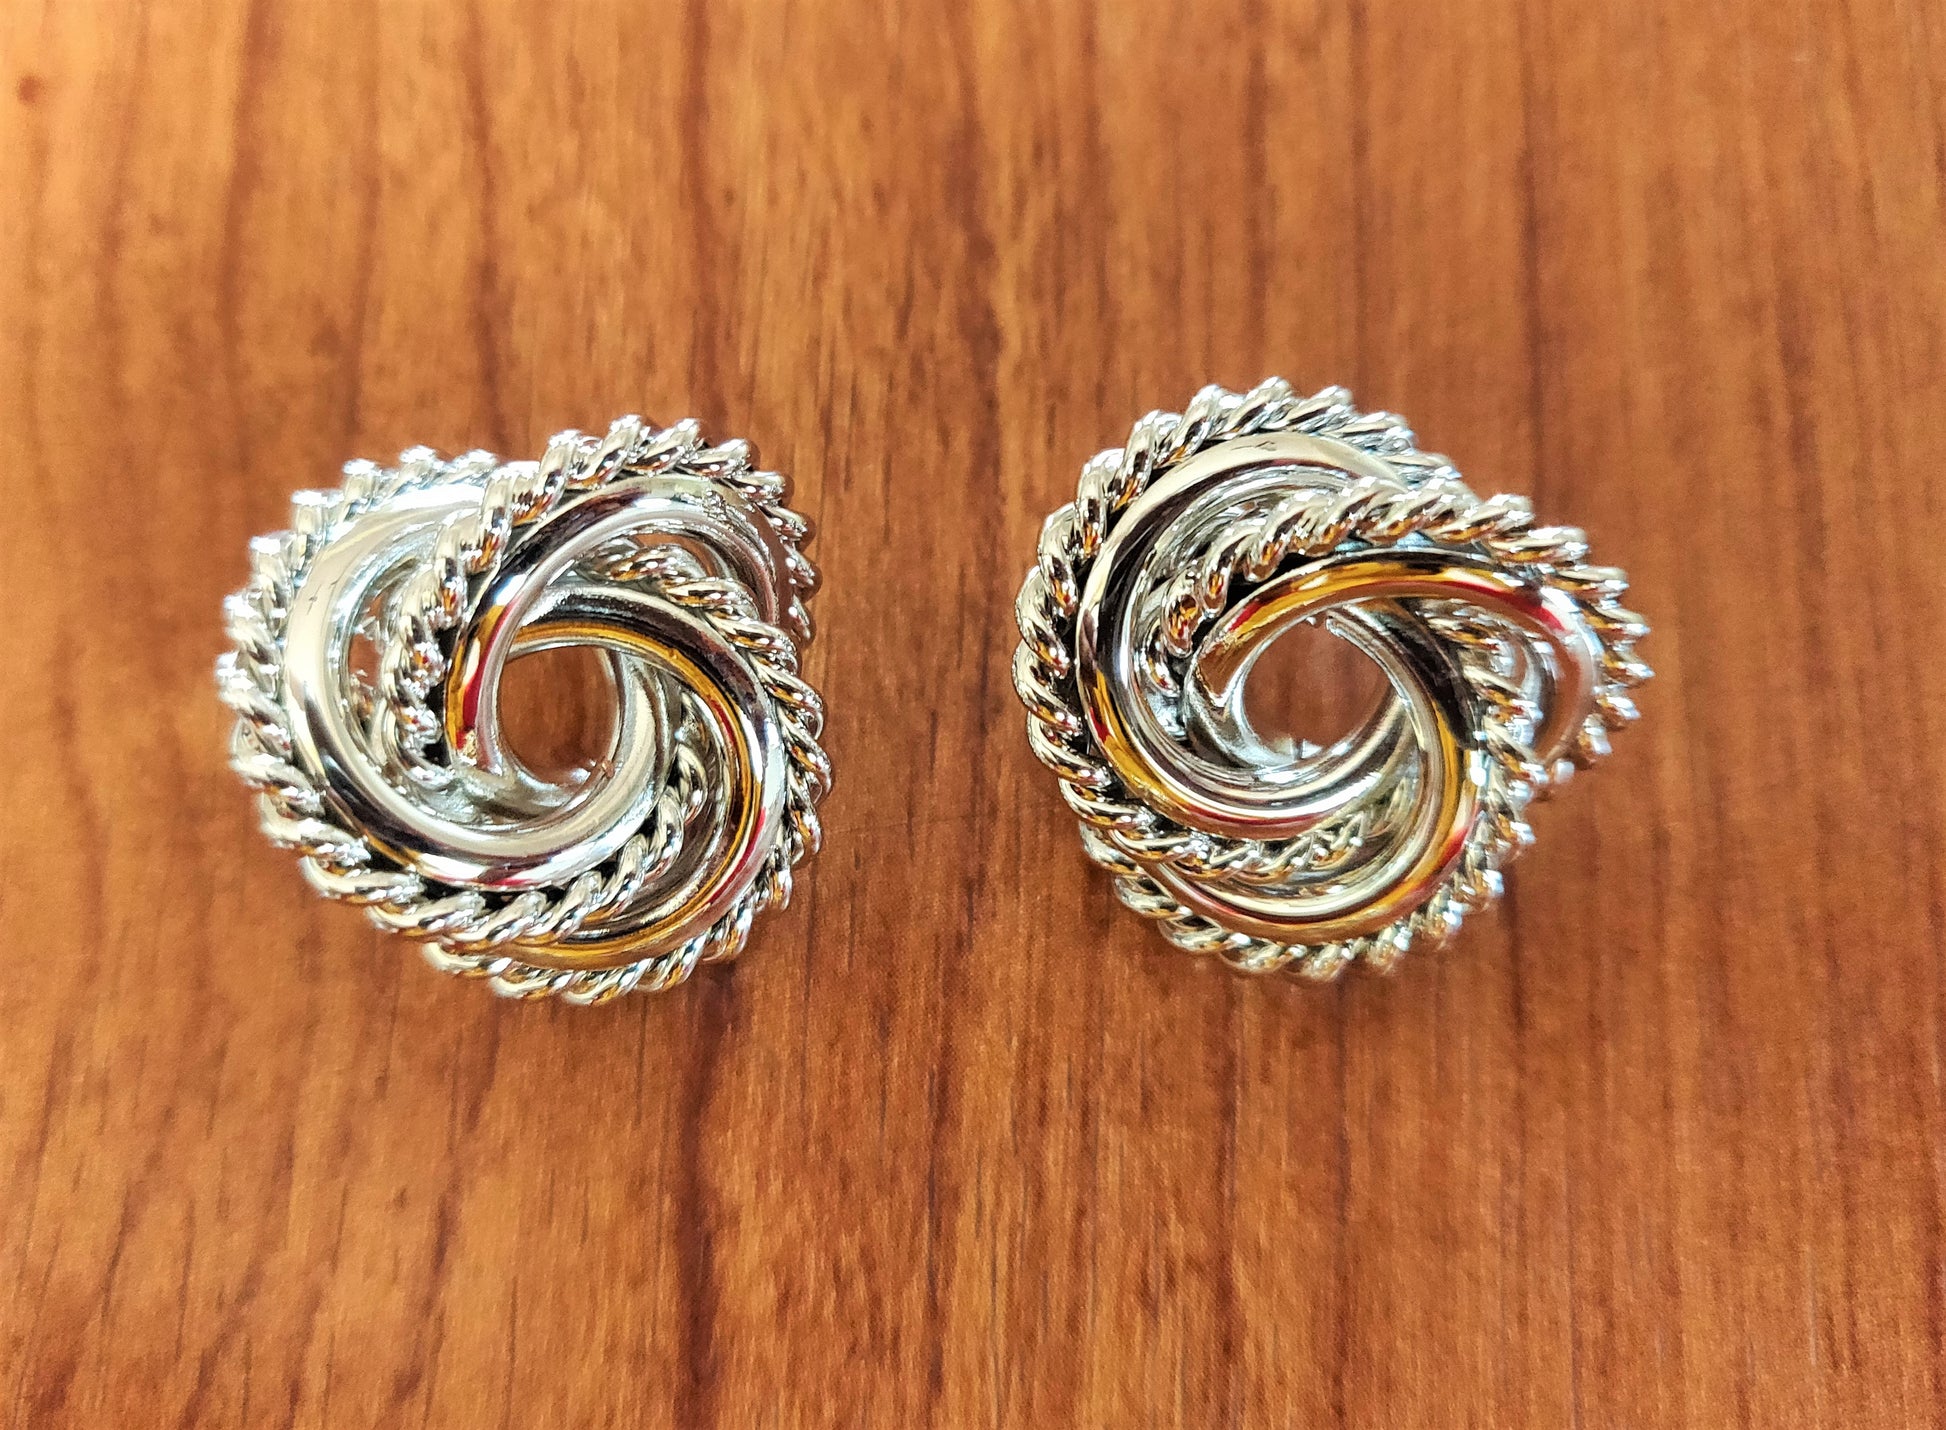 Twisted Loop Earrings - GlitterGleam